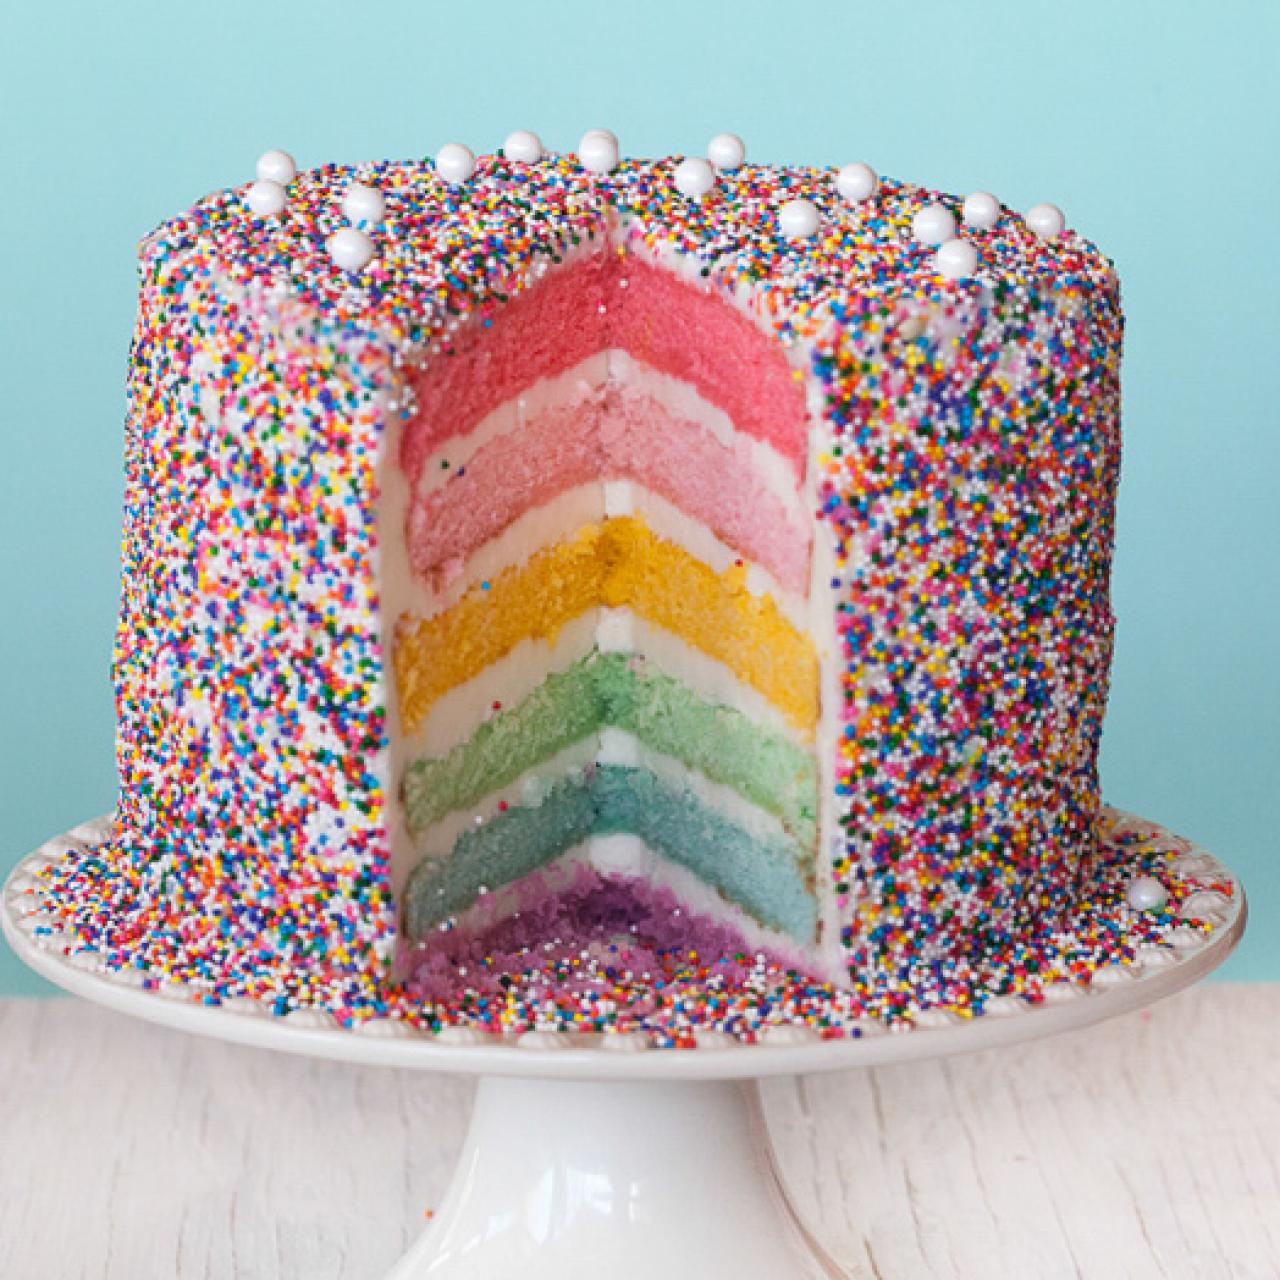 Vanilla Wacky Cake With Rainbow Sprinkles